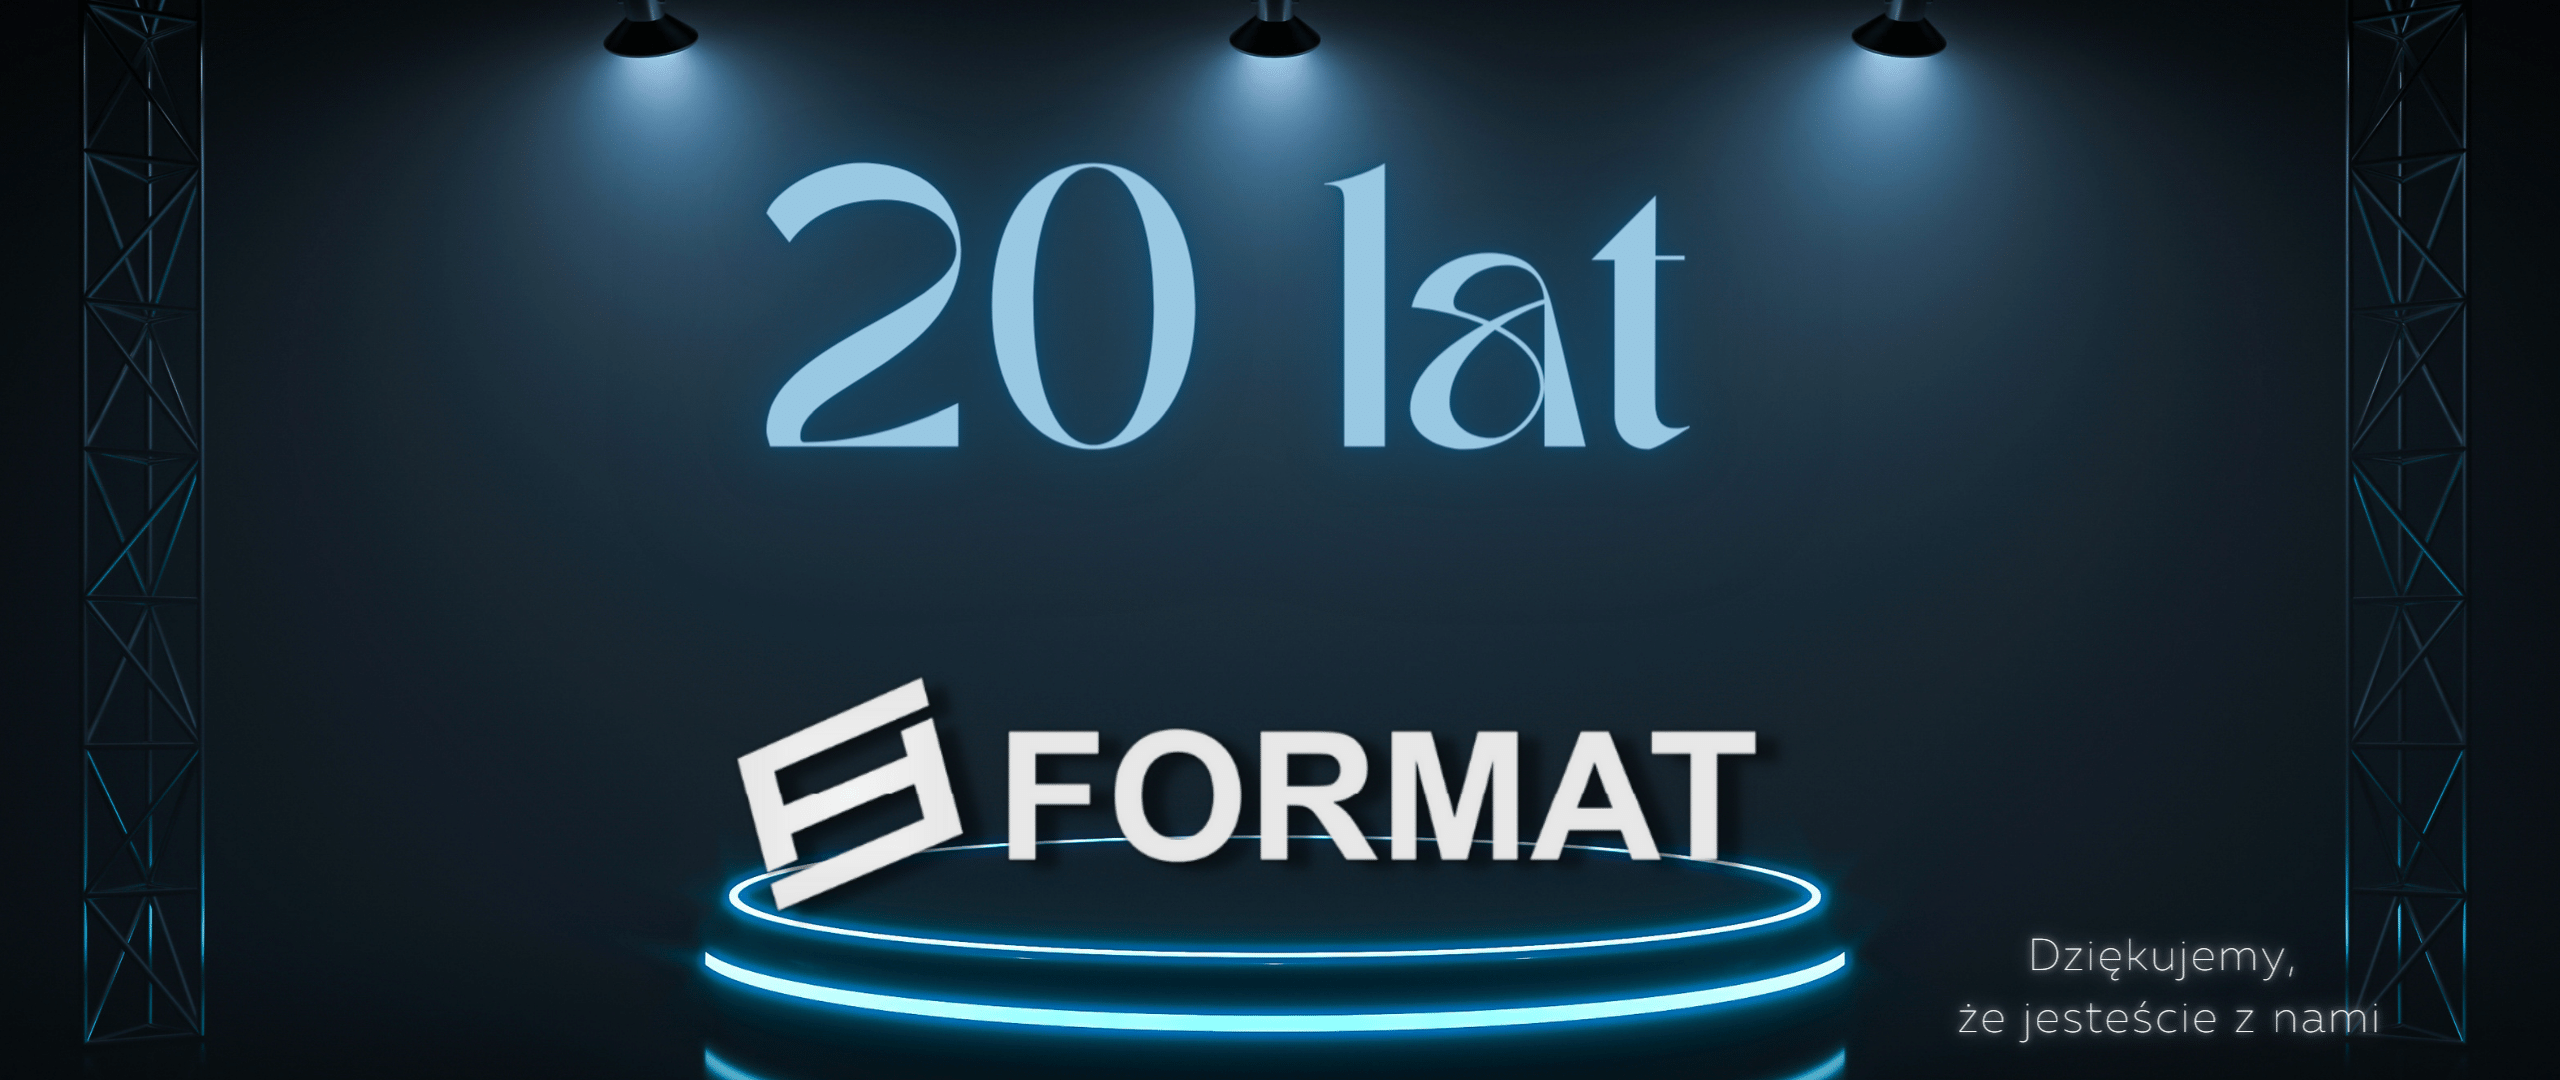 20 lat FORMAT-MS